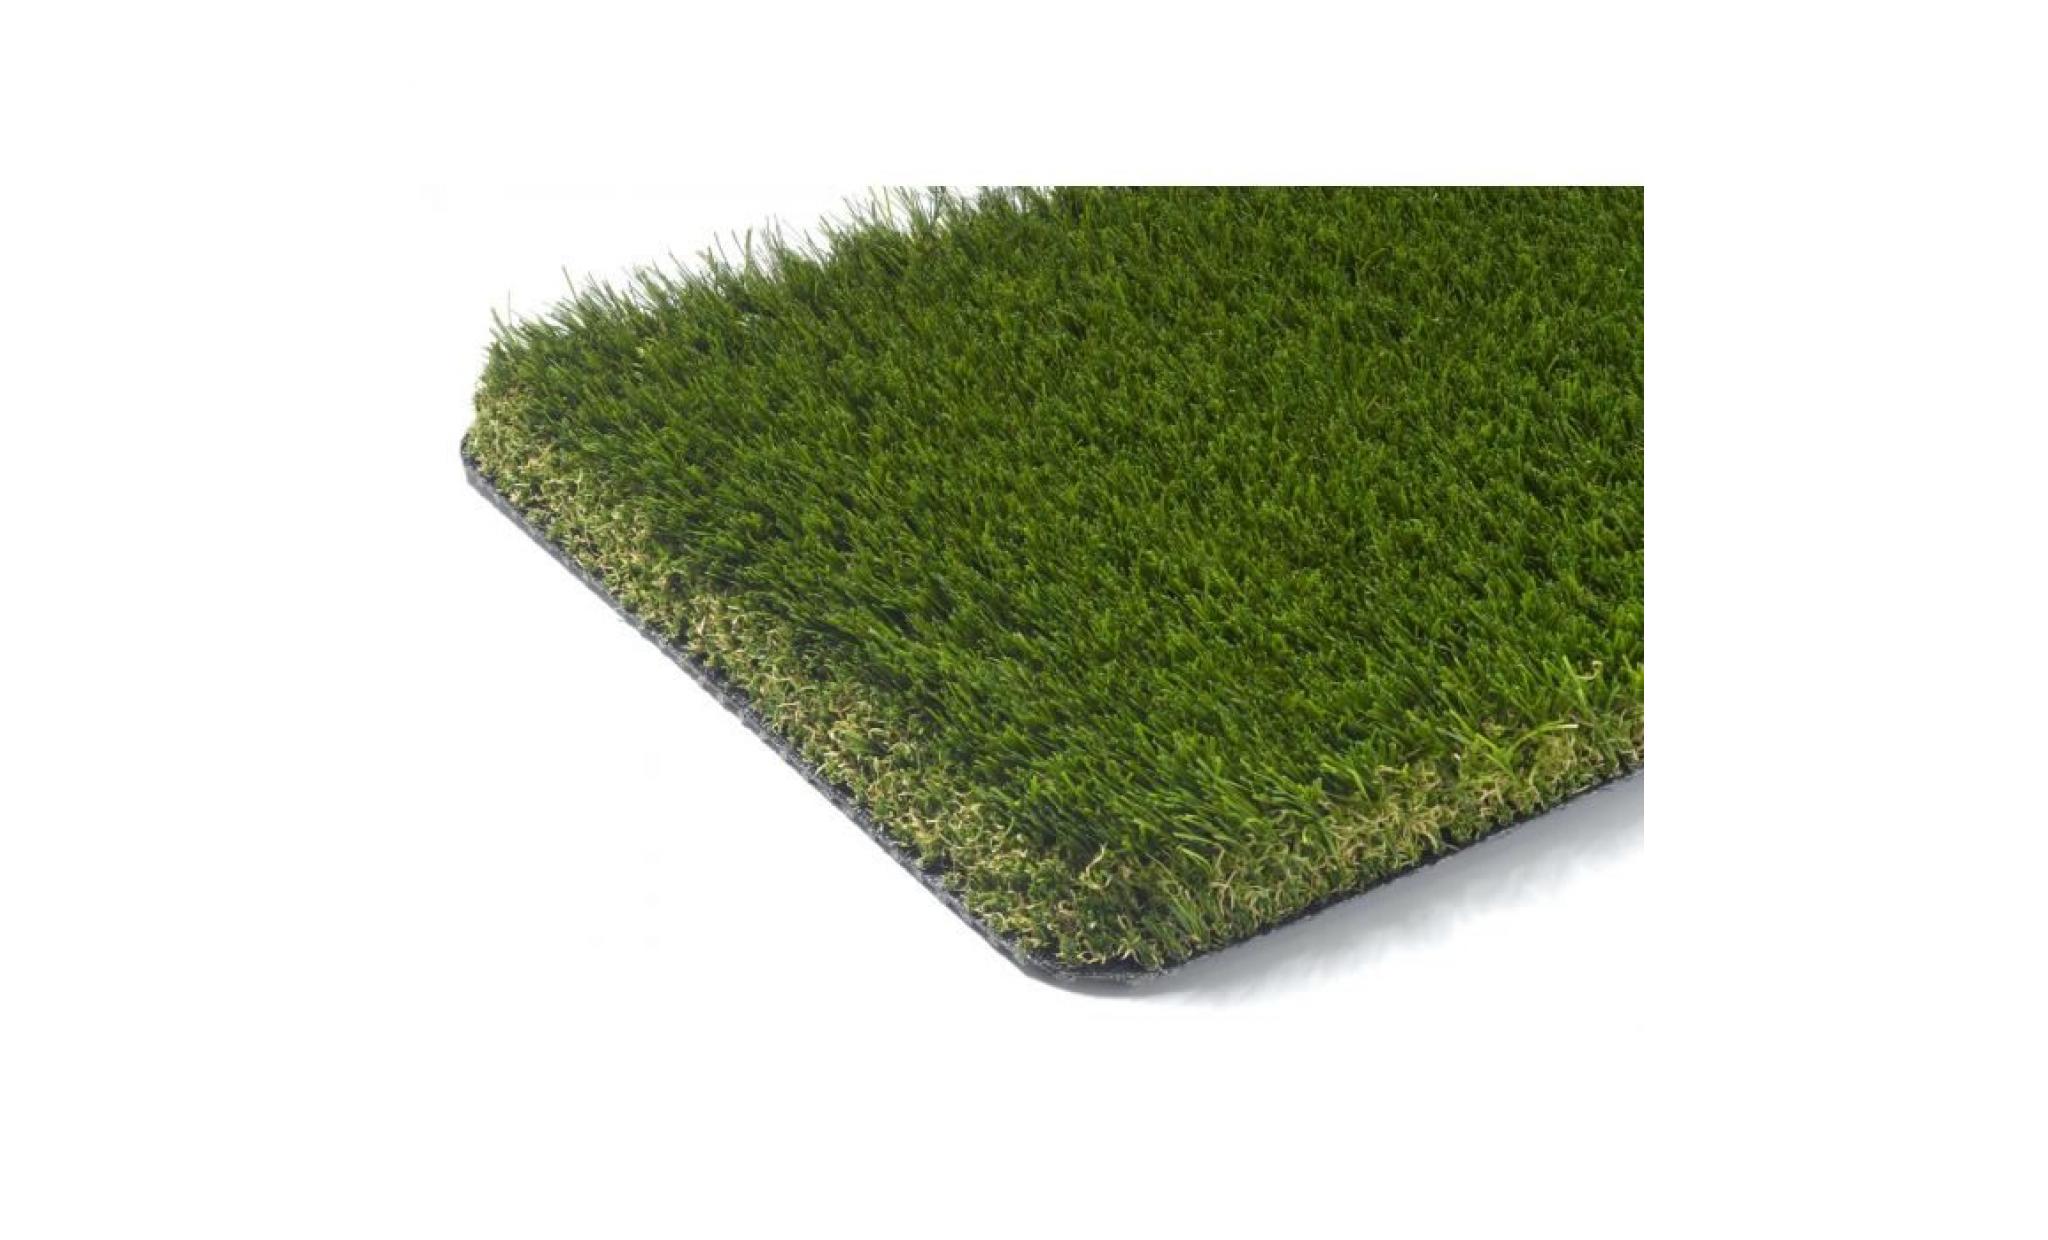 buckingham   tapis type luxe gazon artificiel – pour jardin, terrasse, balcon   vert  [200x200 cm]